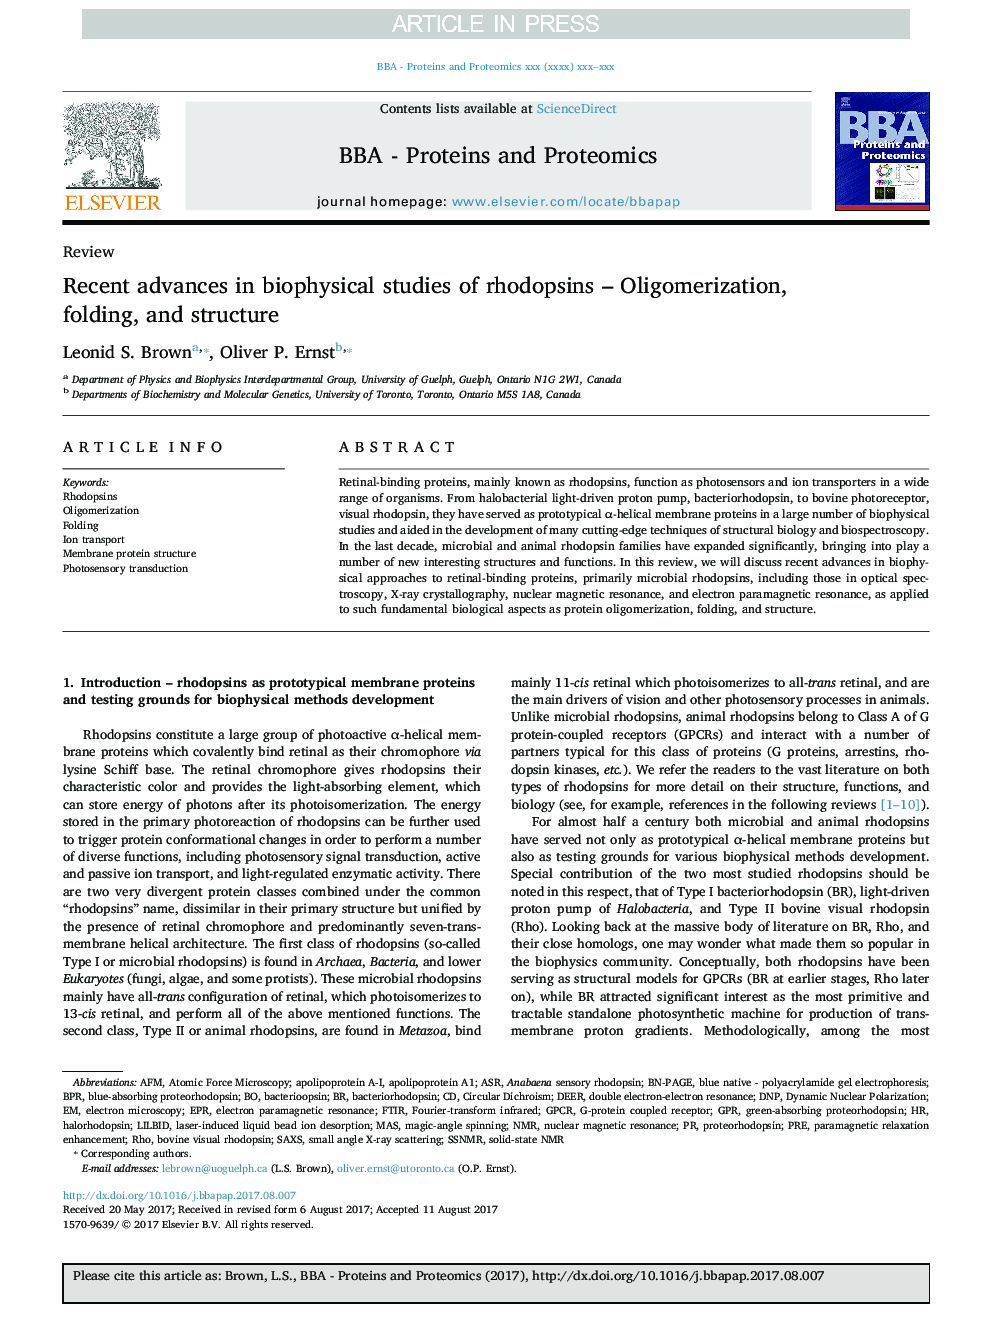 Recent advances in biophysical studies of rhodopsins - Oligomerization, folding, and structure